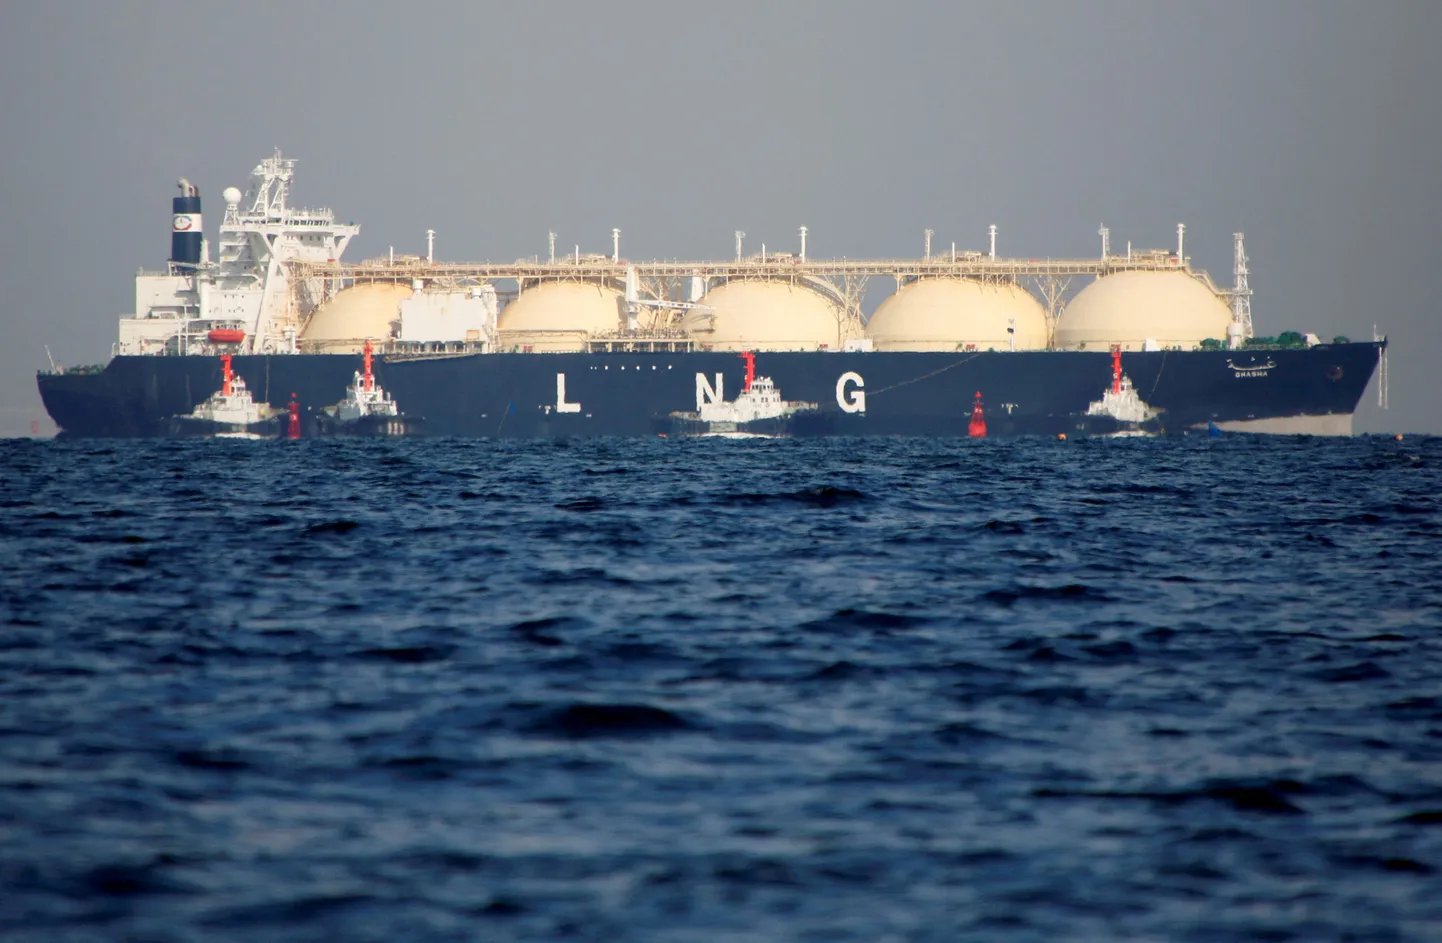 Veeldatud maagaasi LNG tanker.